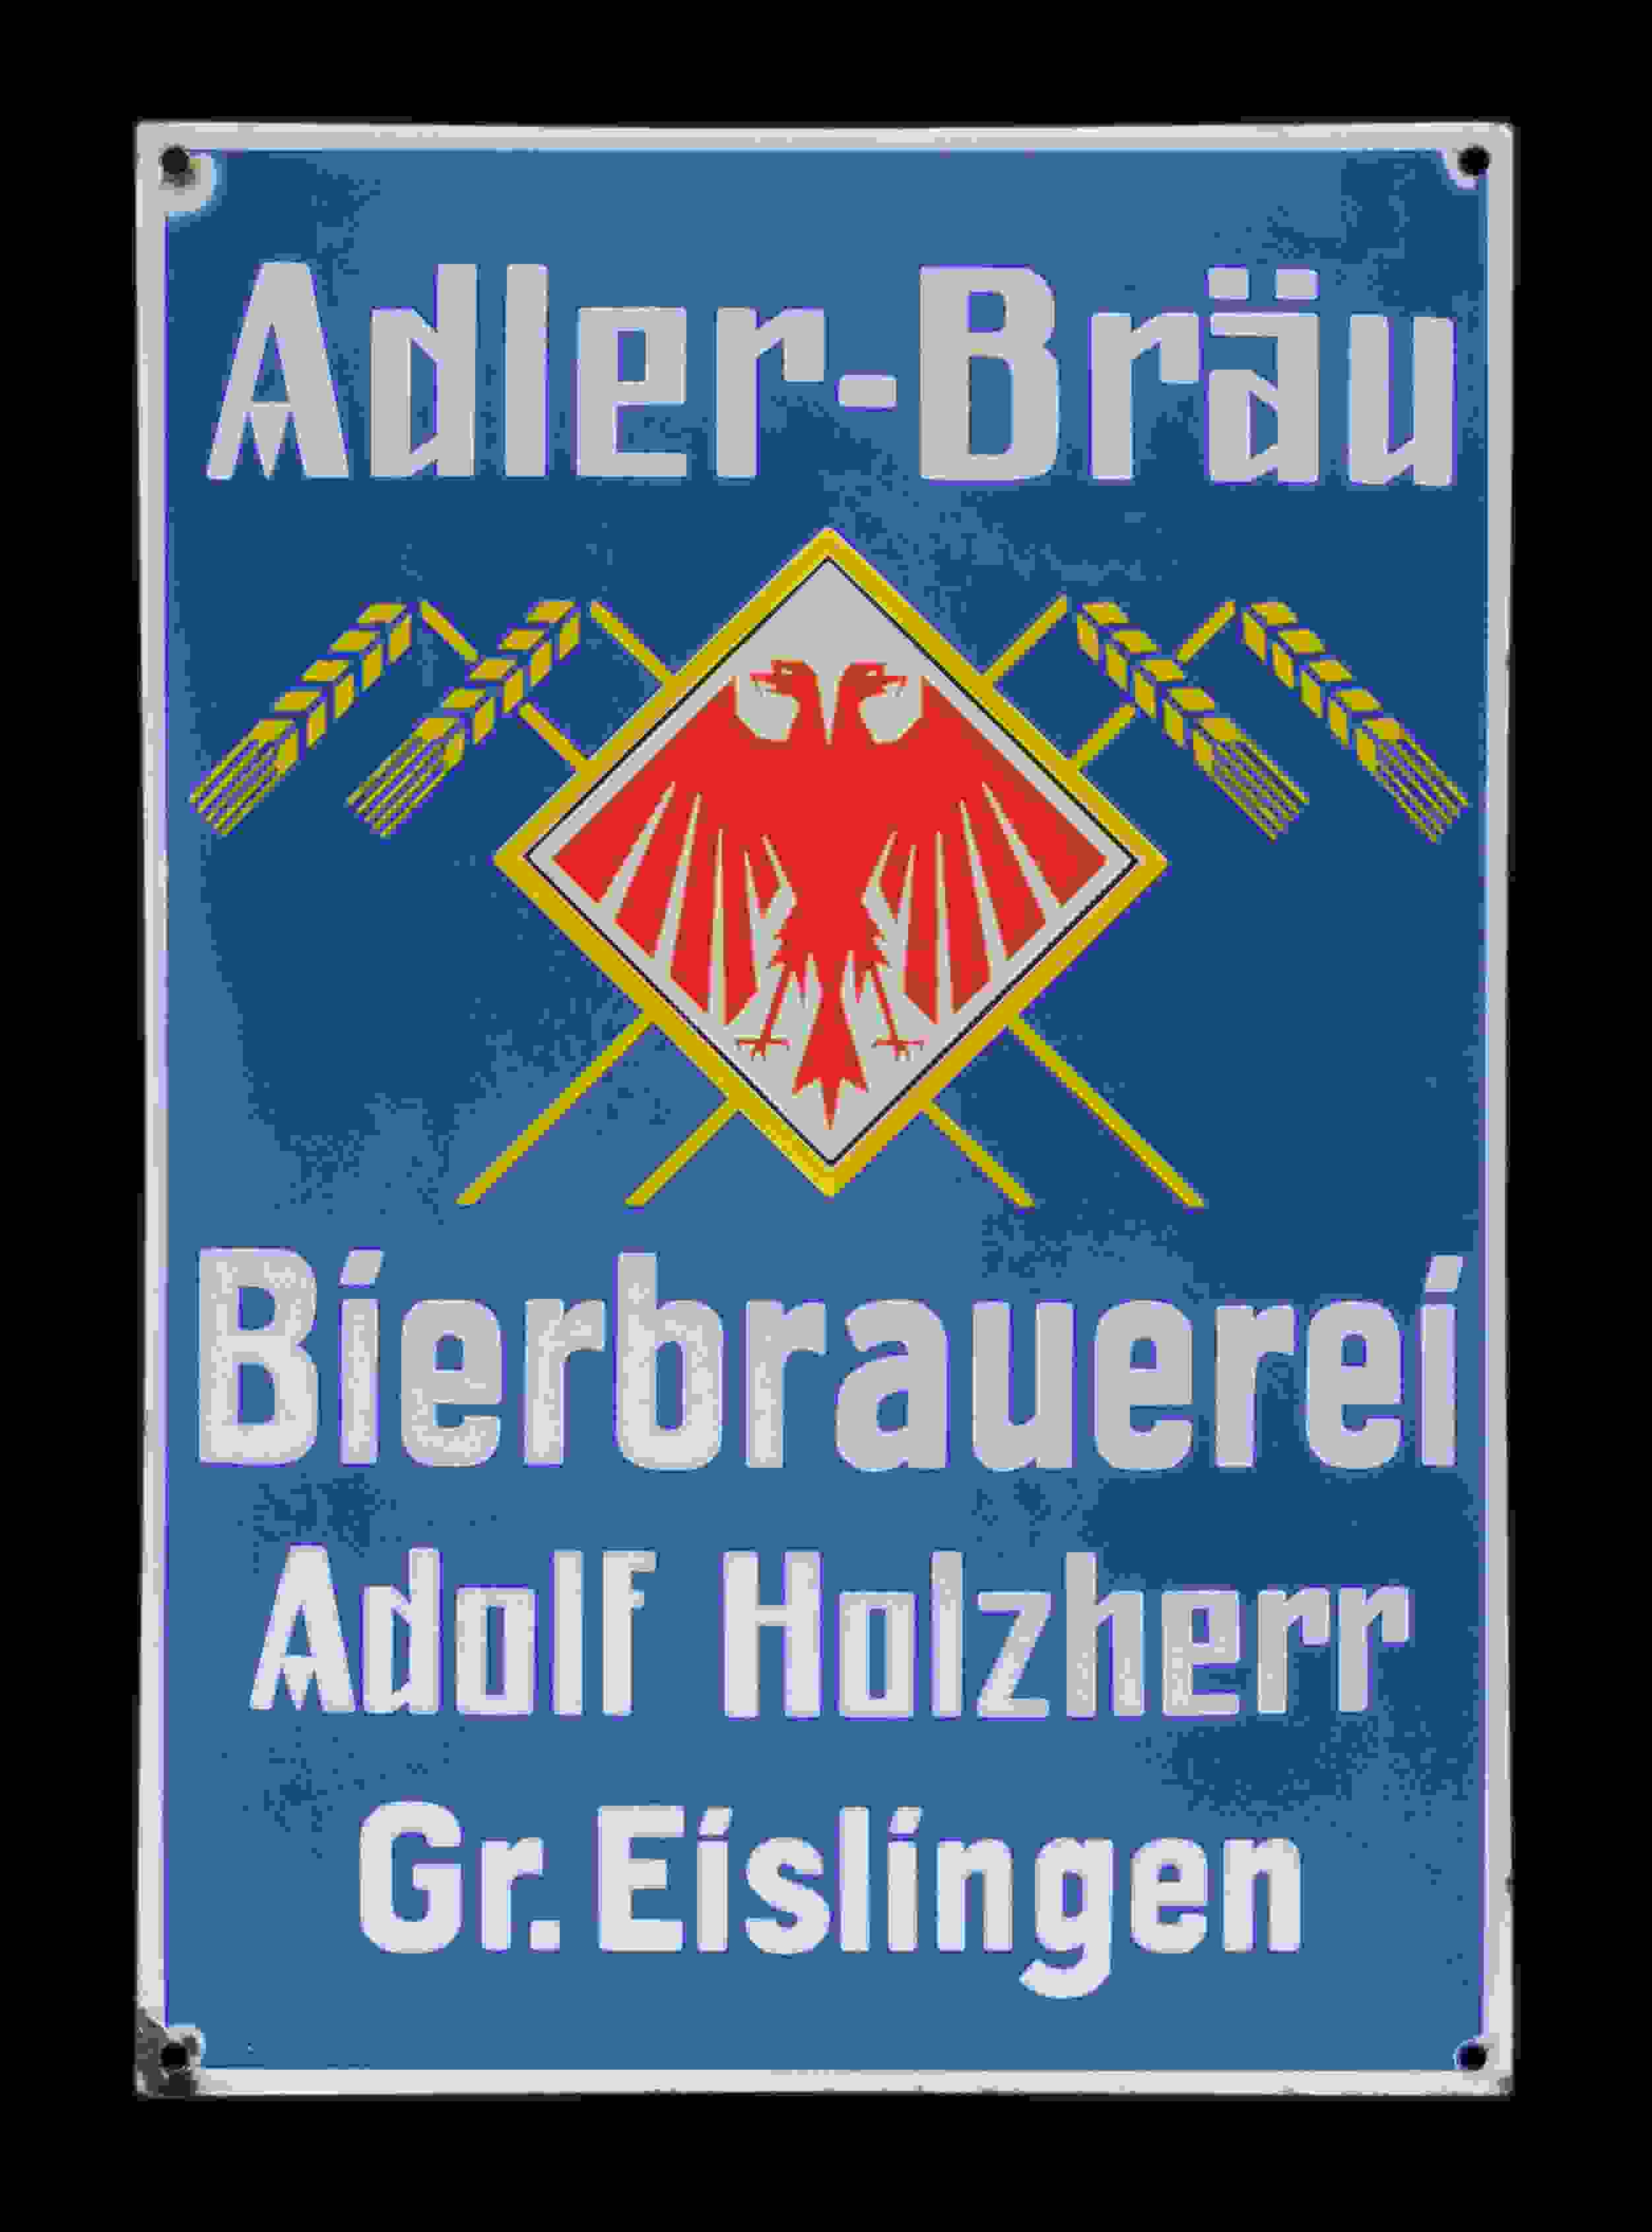 Adler-Bräu Bierbrauerei 